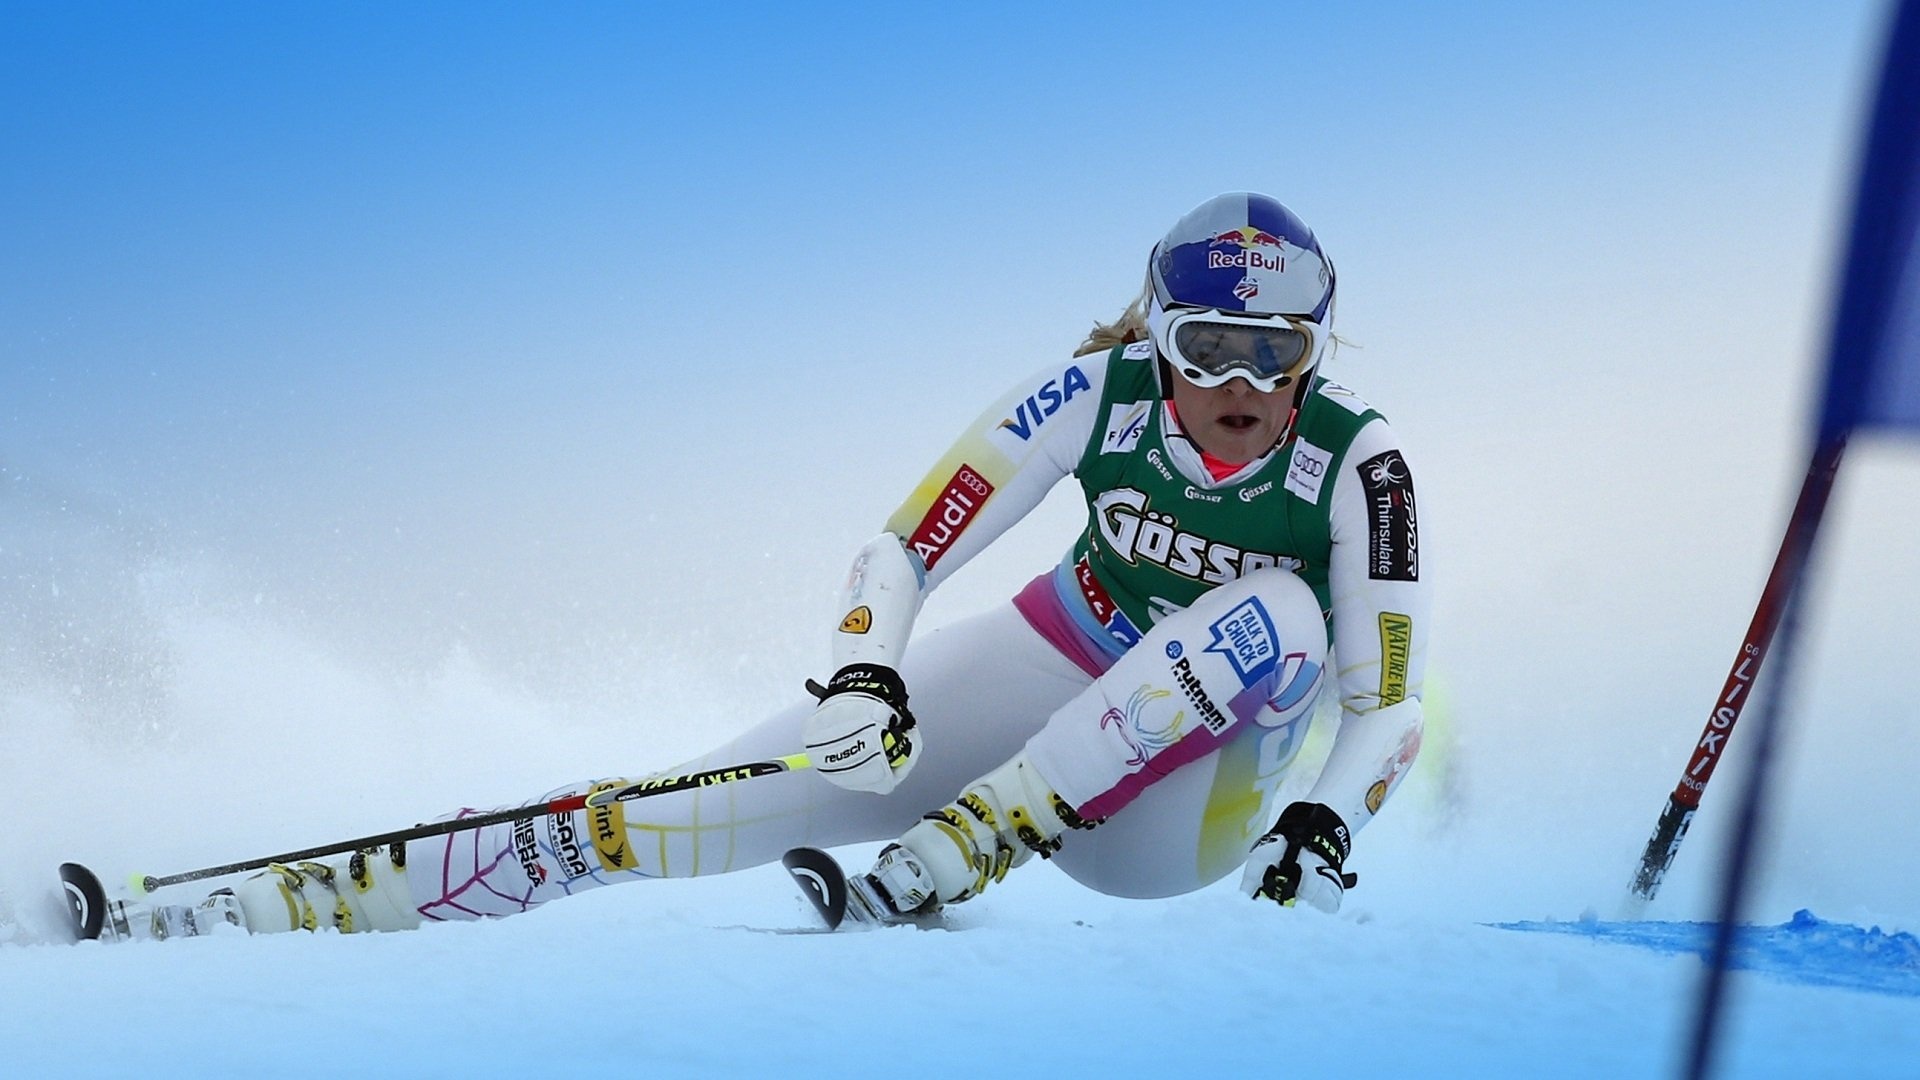 Lindsey Vonn, Skiing wallpaper, Amazing sports photography, Visual delight, 1920x1080 Full HD Desktop